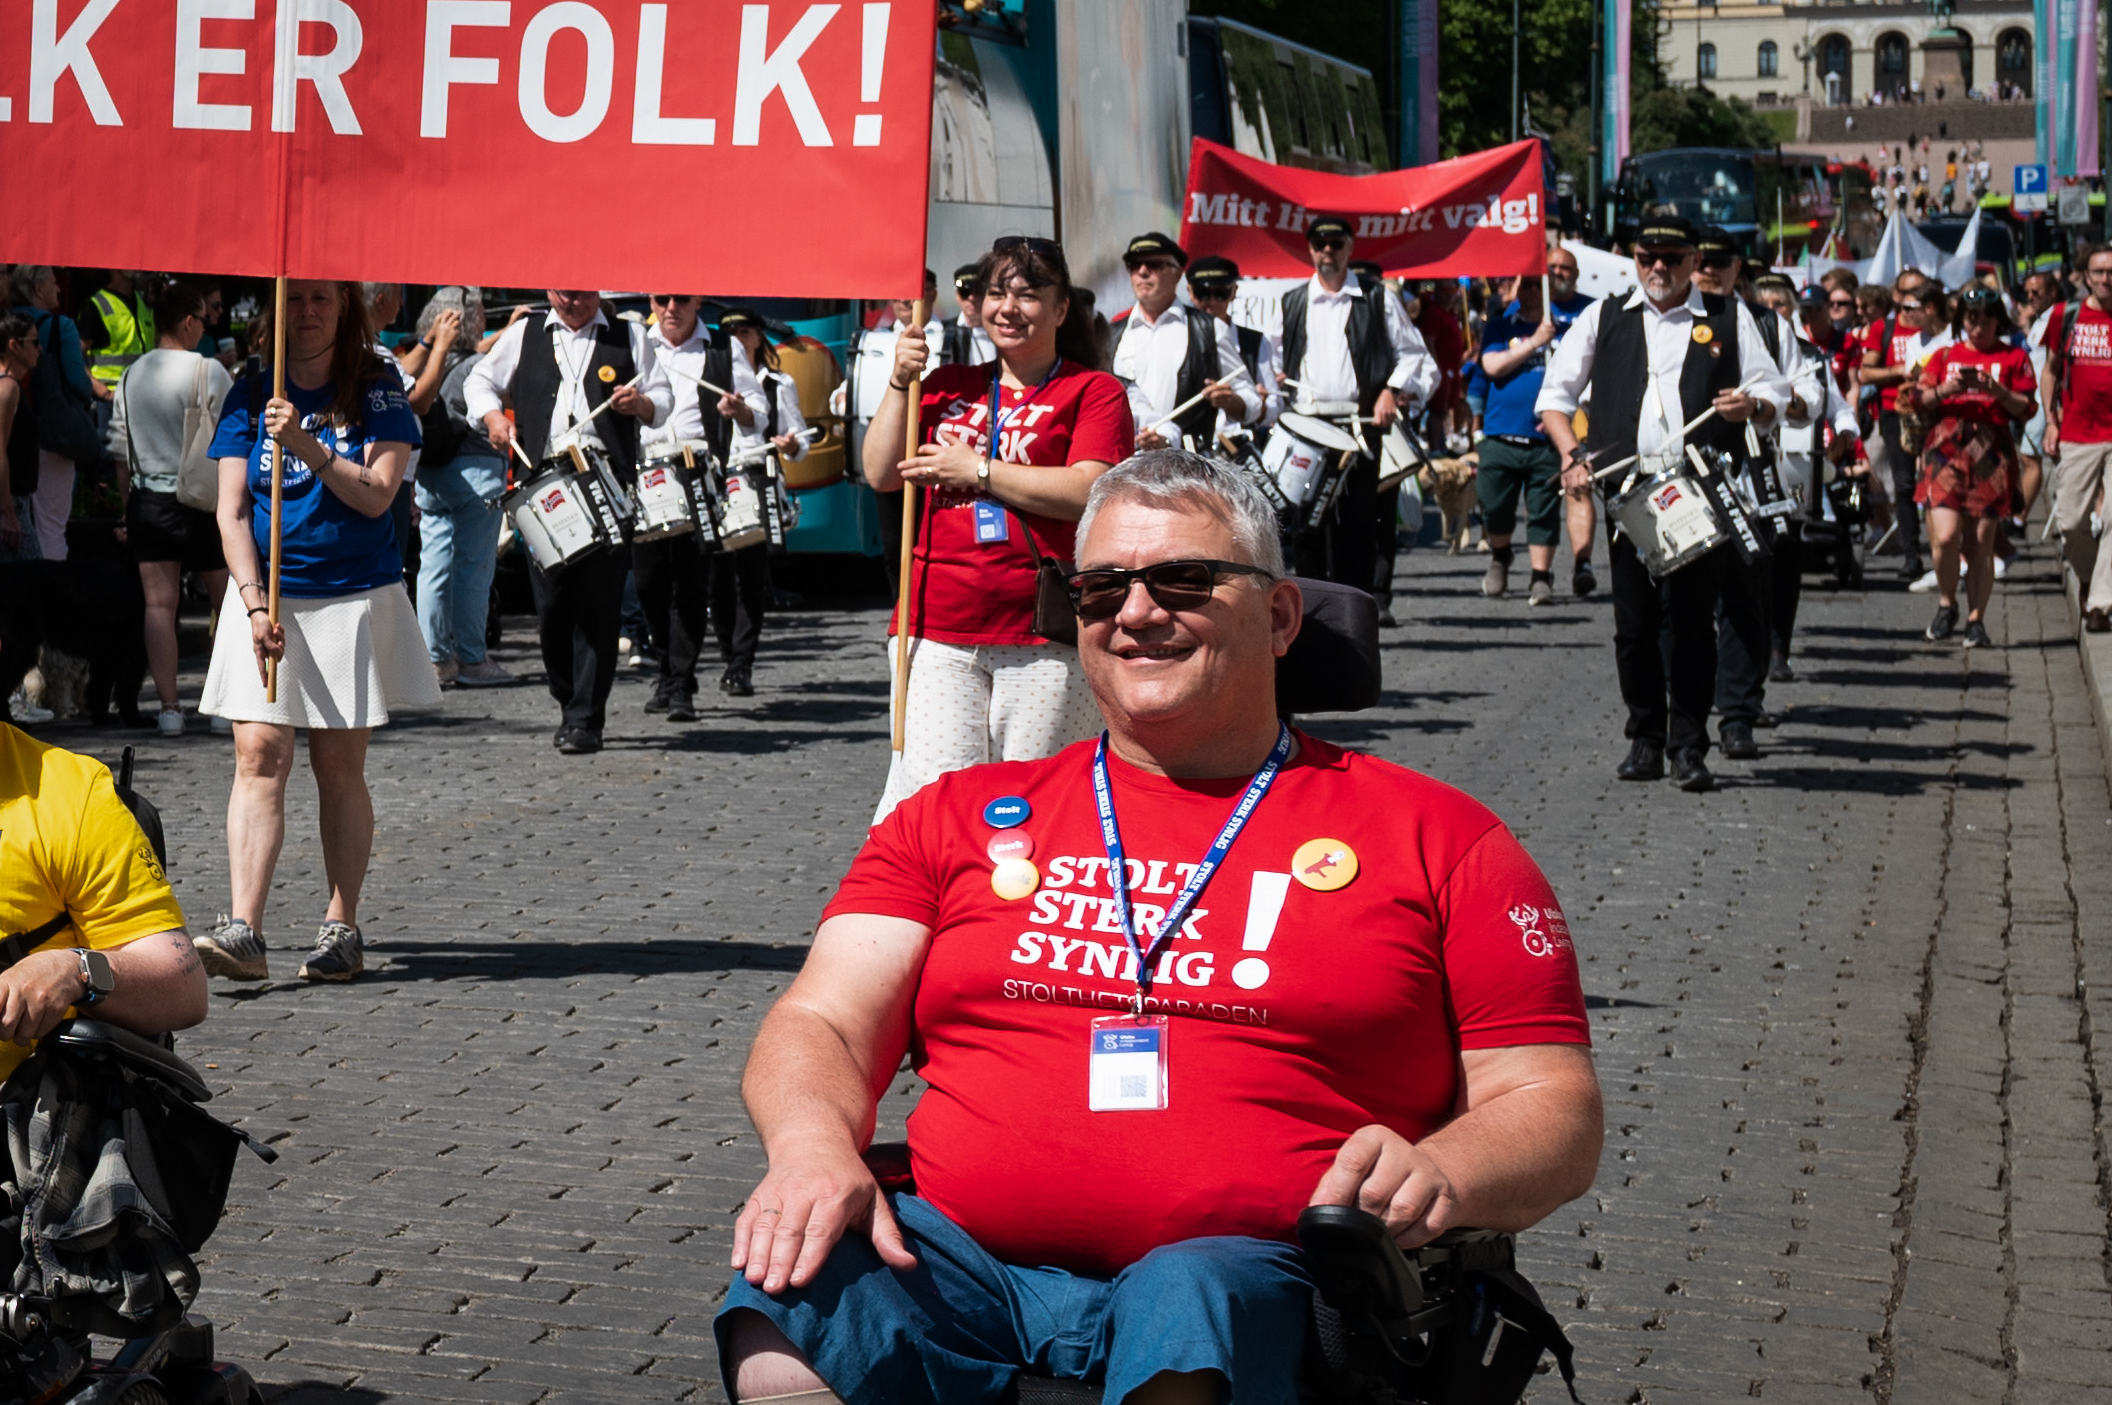 Aage Gjesdal foran parolen "Folk er folk" i paraden i år. Han har rød t-skjorte med teksten "Stolt, sterk, synlig!" på. Han sitter i en rullestol.